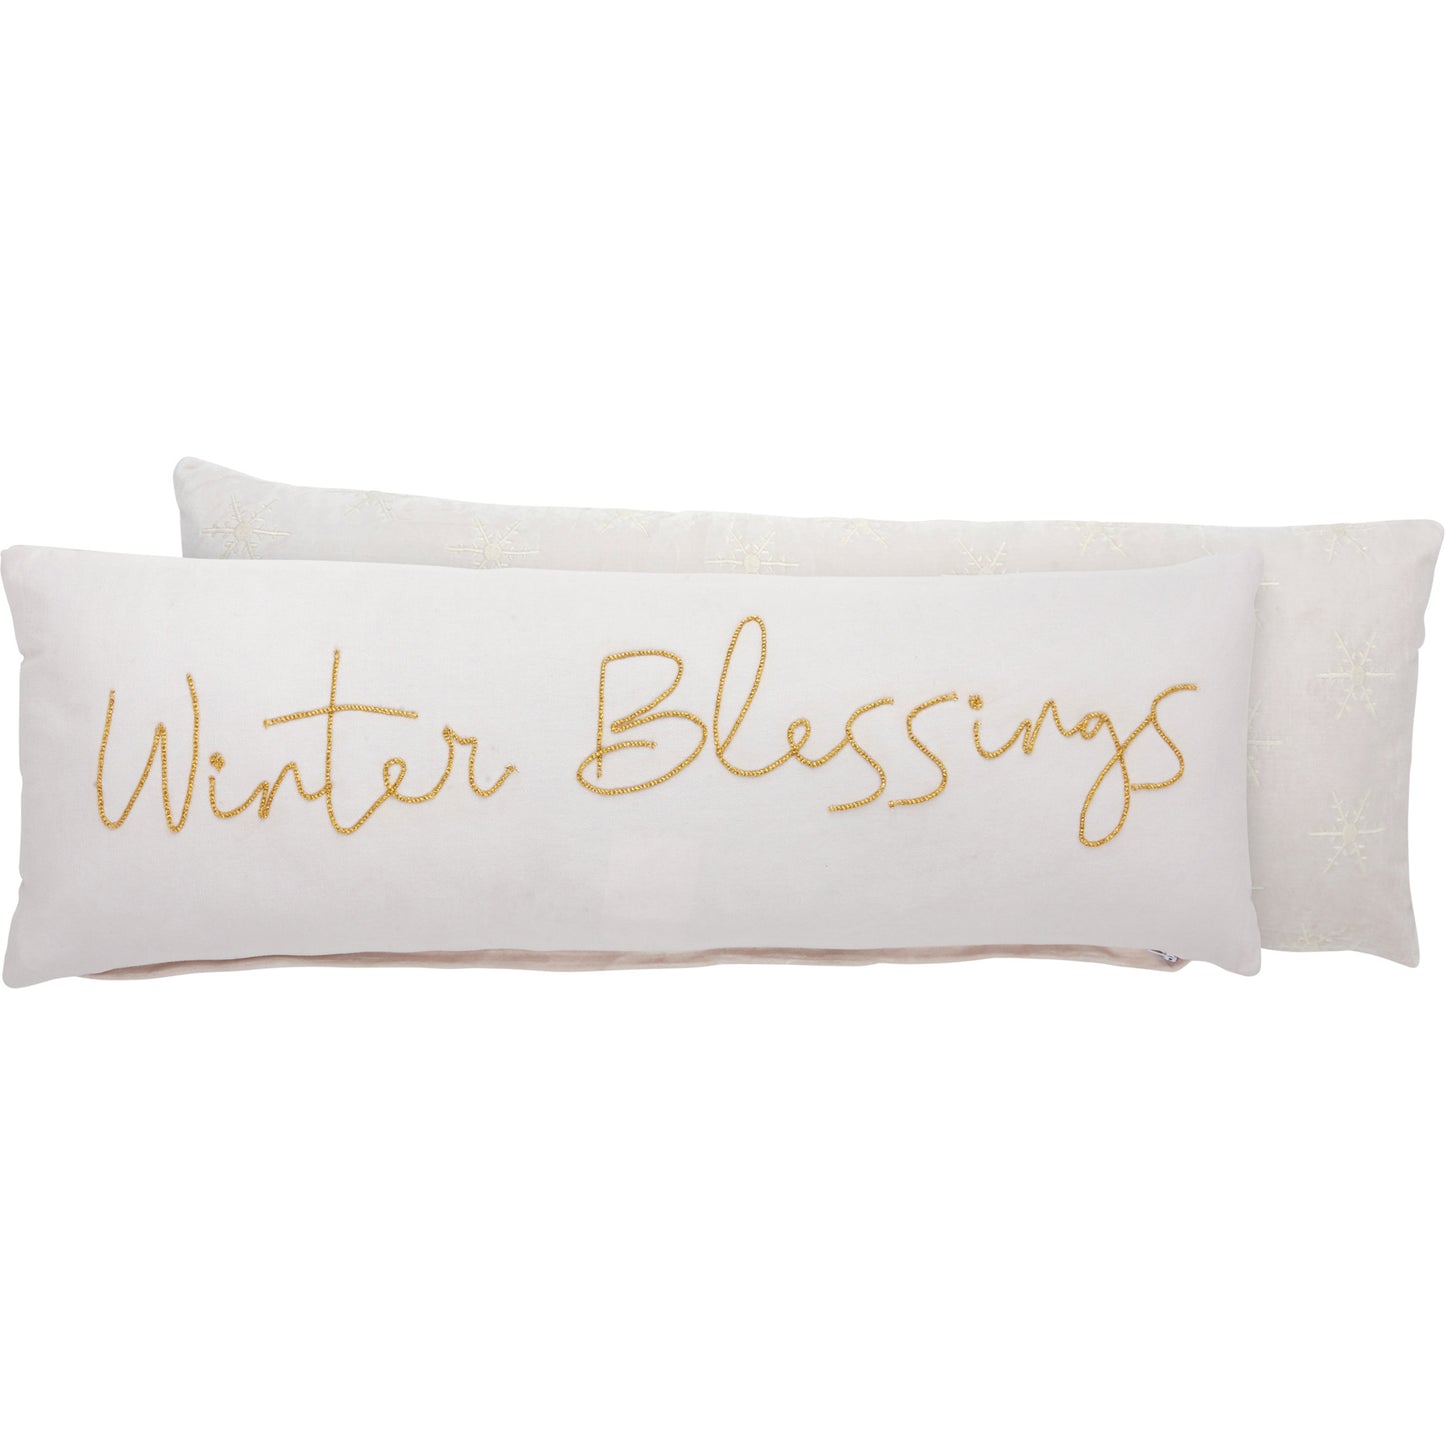 Winter Blessings Pillow